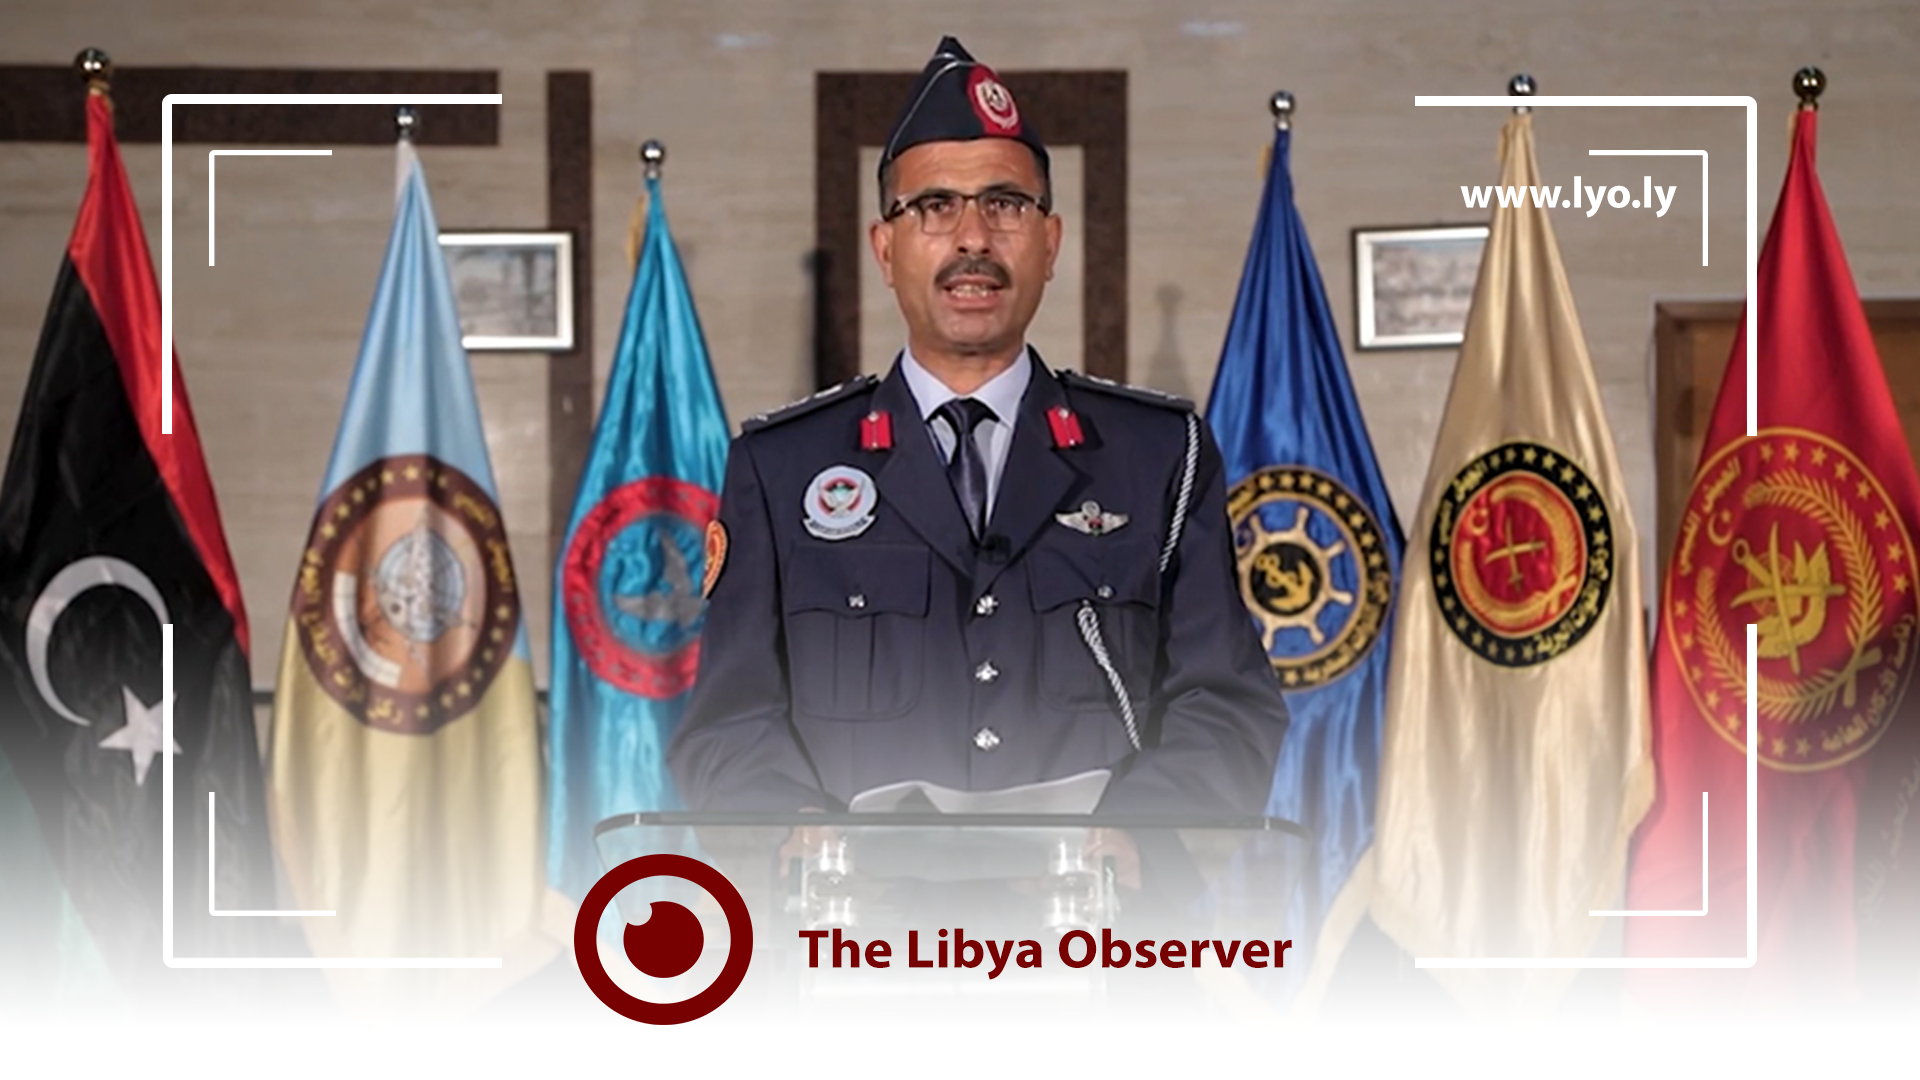 Spokesman of the Libyan Army, Colonel Mohammad Qanunu